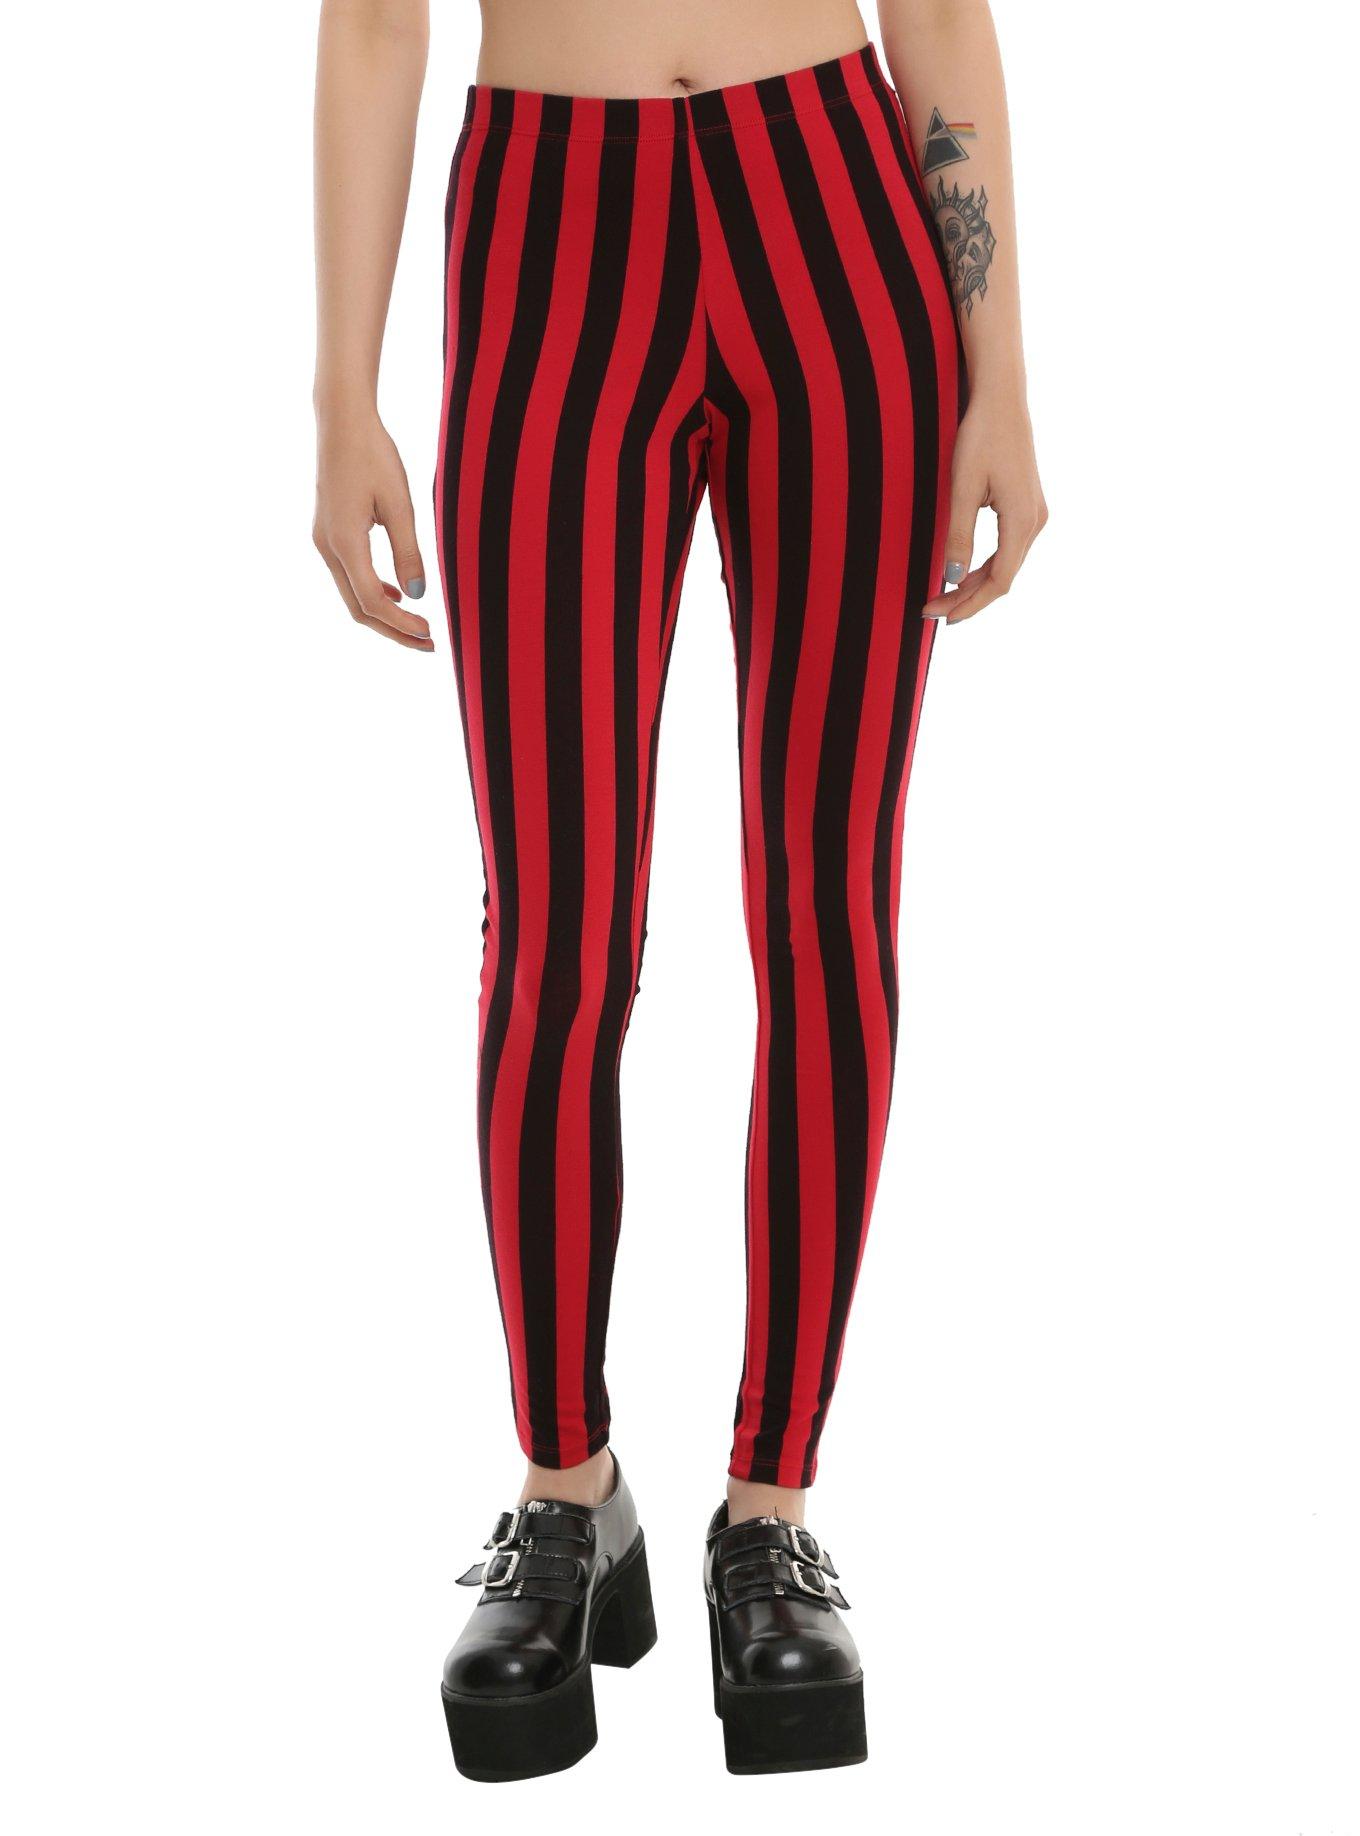 Blackheart Red & Black Stripe Leggings, RED, hi-res